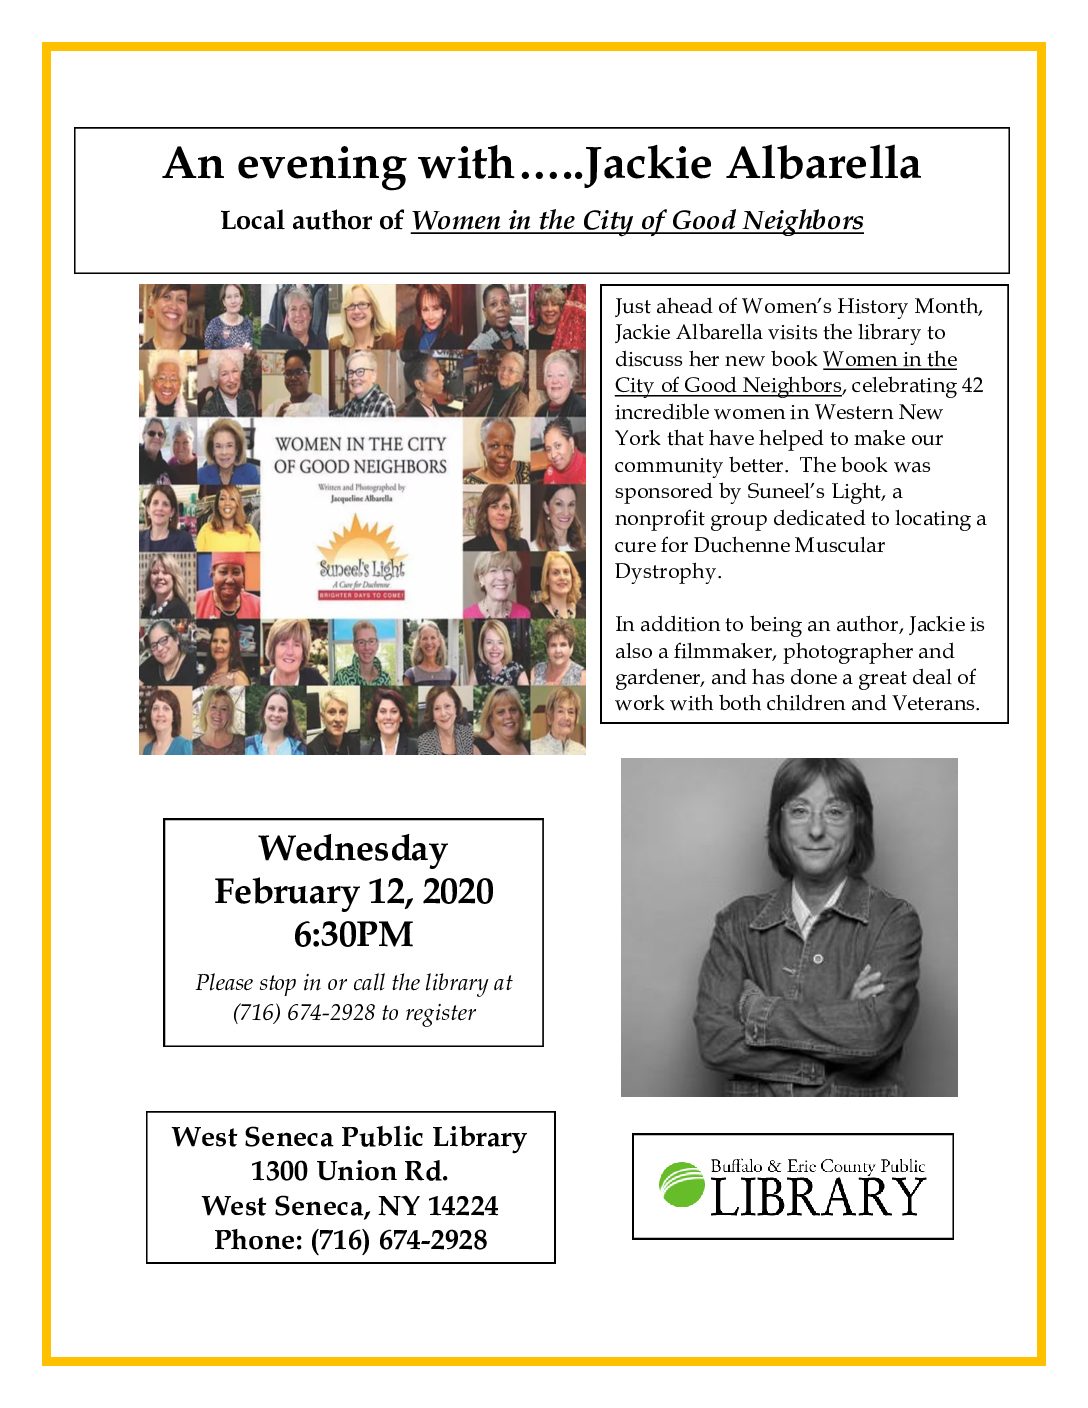 Hear Jackie speak at the West Seneca Library